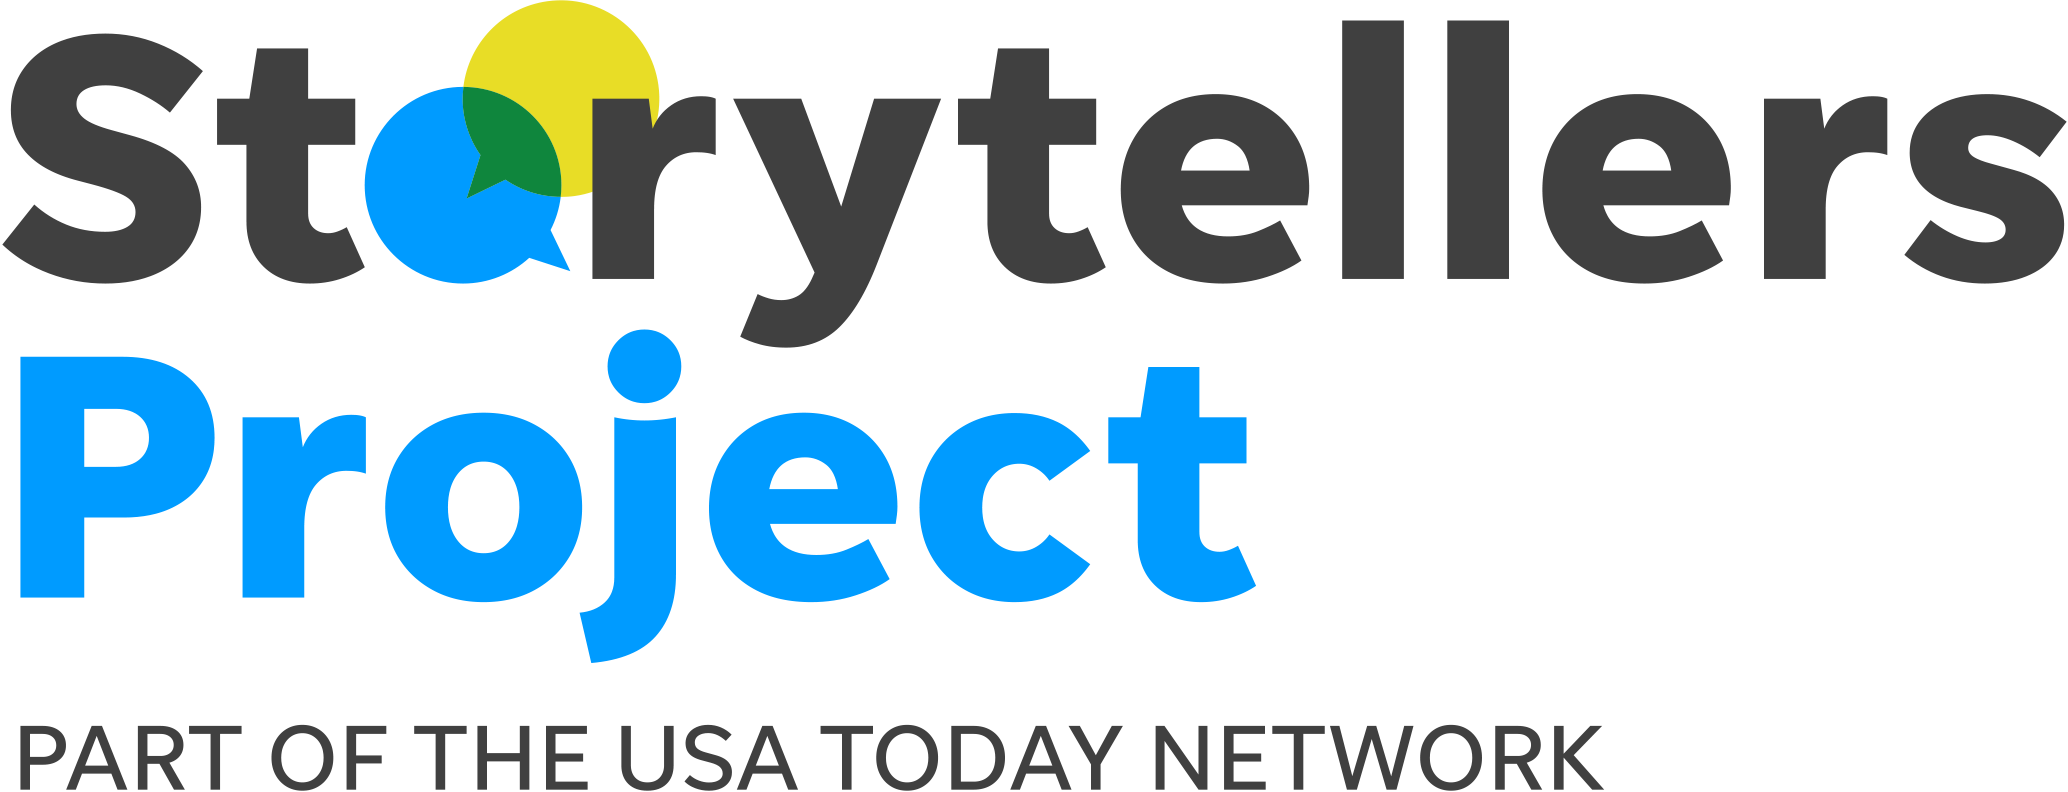 Storytellers Project Logo